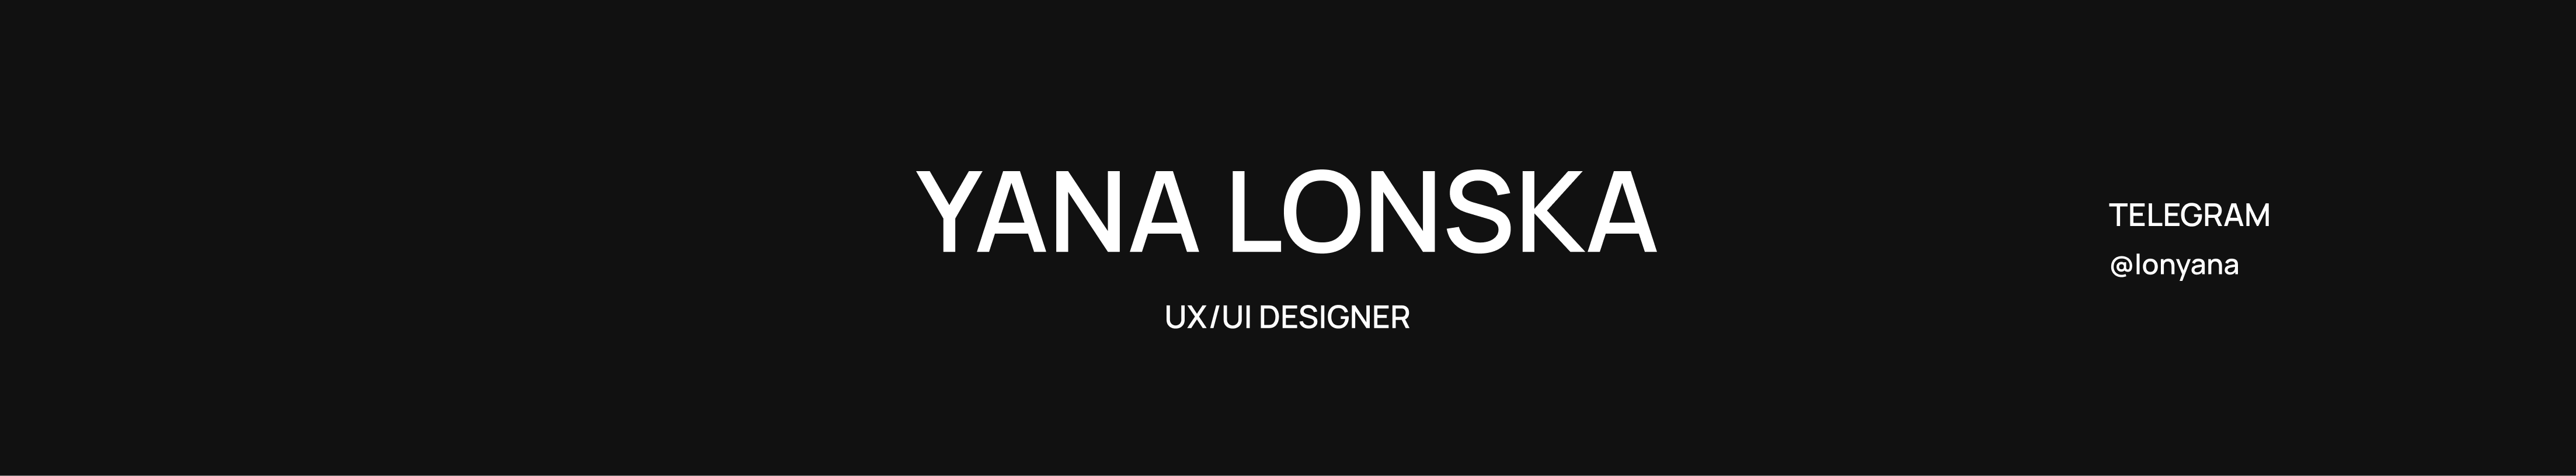 Yana Lonska's profile banner